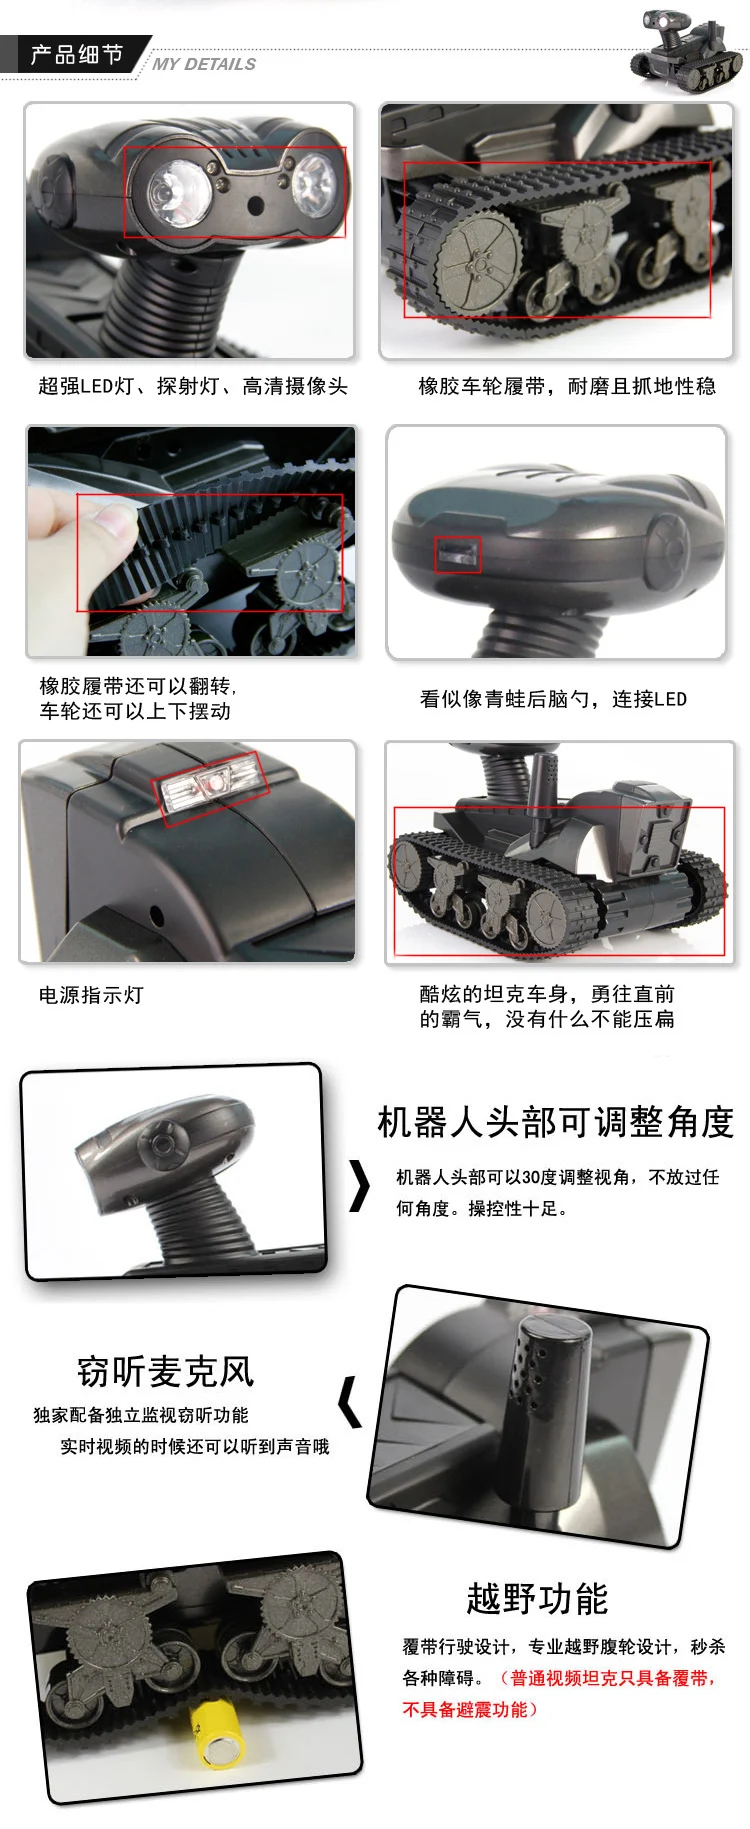 Робот Танк wifi HD видео камера wifi шпион Танк для iOS, Android, iphone, фото, монитор подслушивания, танк дистанционного управления